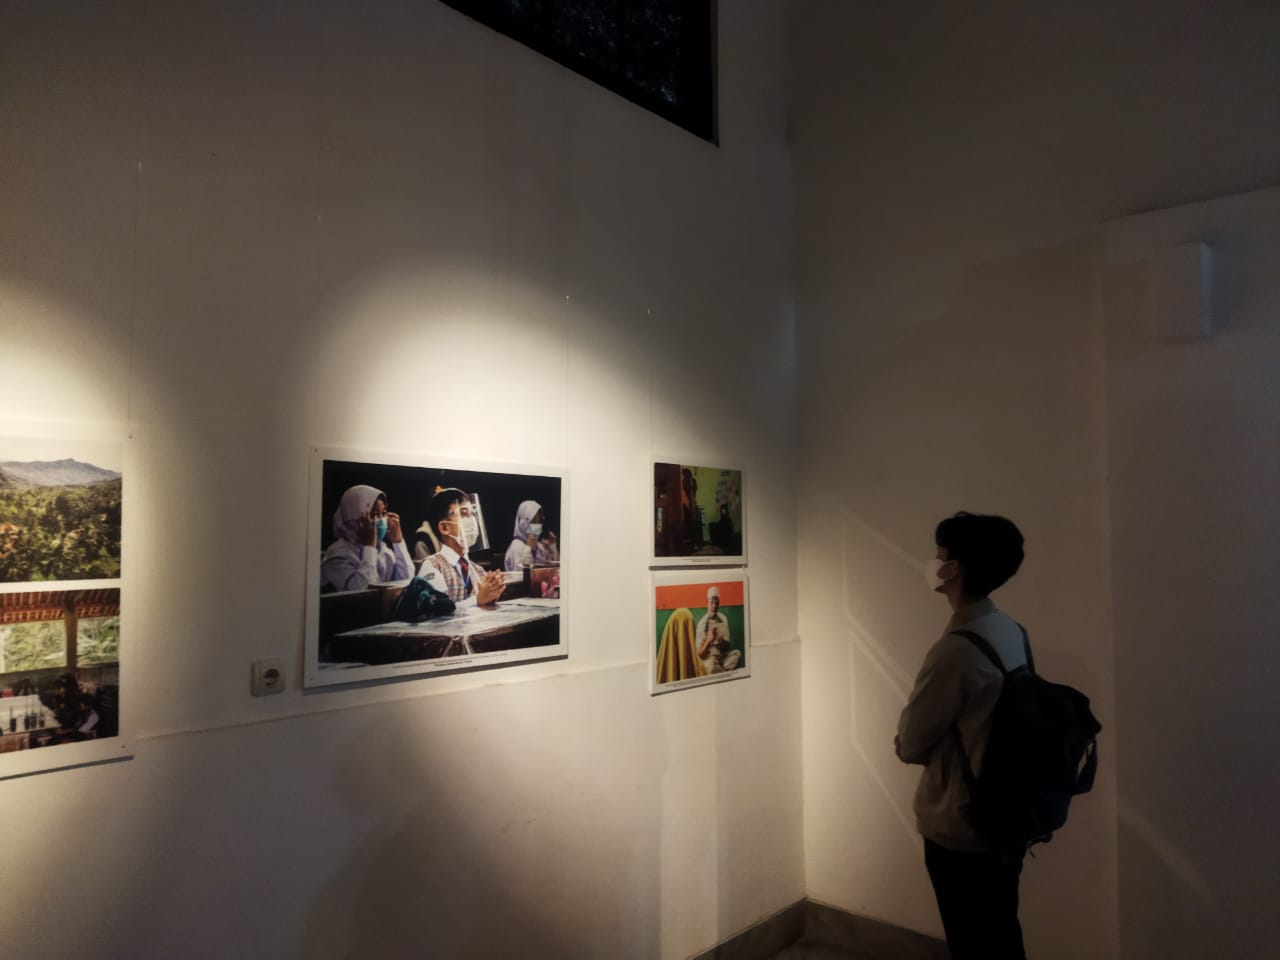 PAMERAN: Pengunjung mengamati salah satu karya dalam pameran foto bertajuk '731' yang digelar PFI Bandung di Gedung Indonesia Menggugat, pada Rabu (2/3). (Foto: Nizar/Jabar Ekspres)